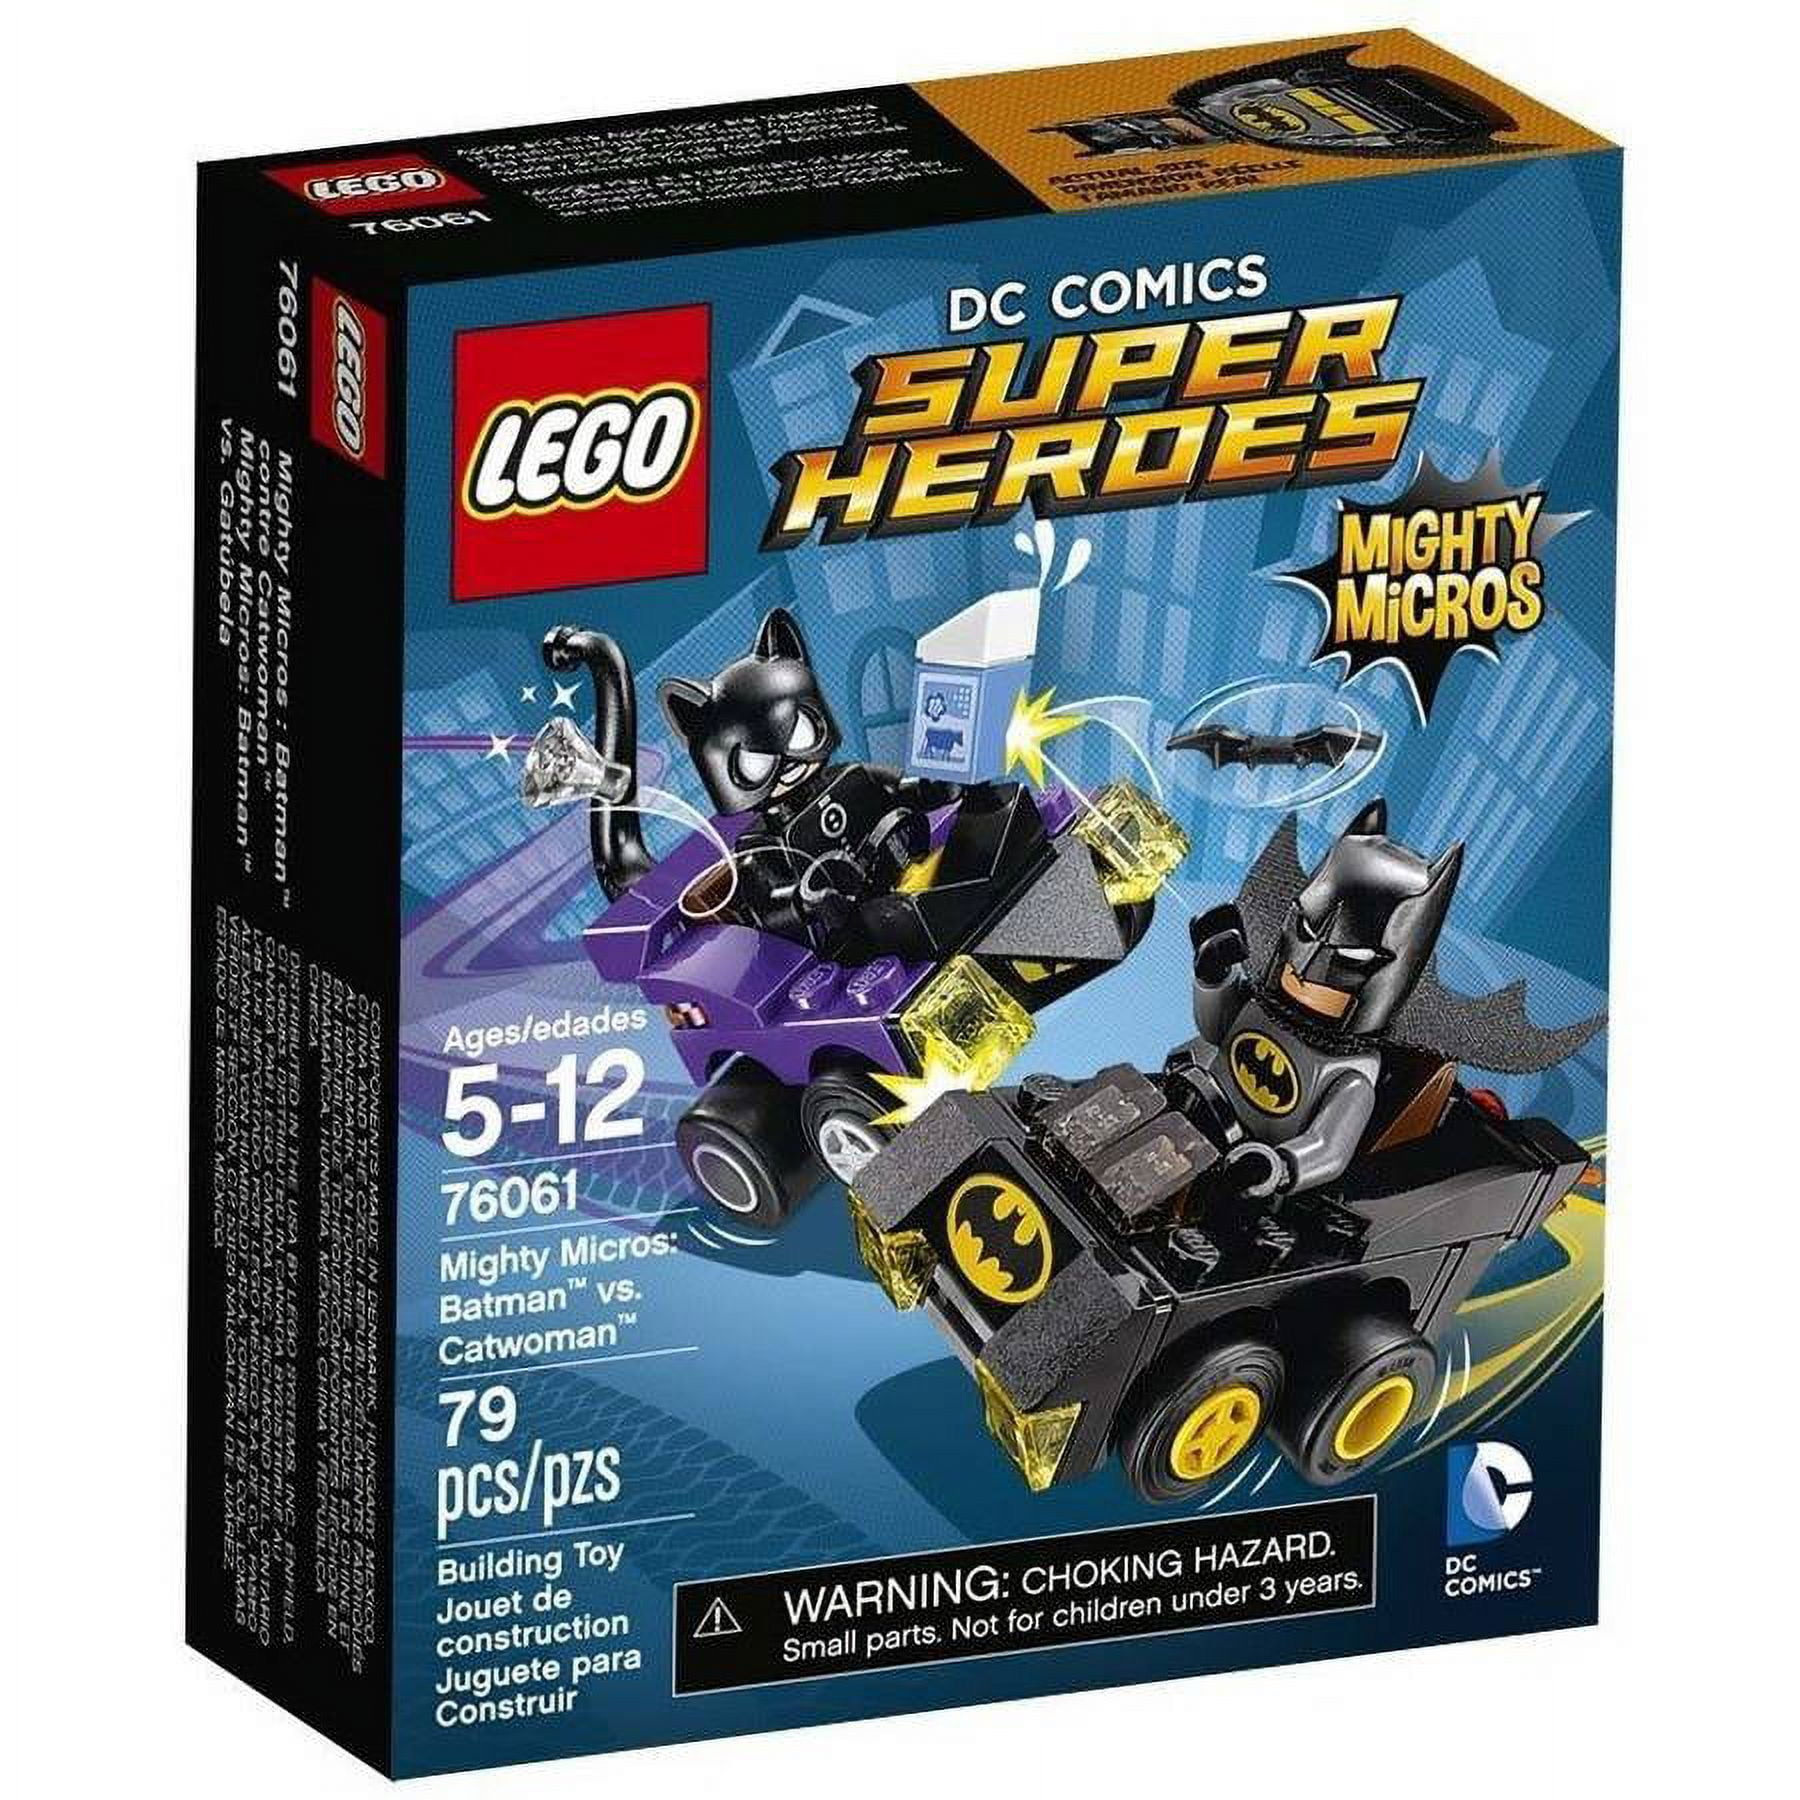 LEGO DC Batman Batcave: The Riddler Face-Off 76183 Building Kit; Cool  Gotham City Batcave Toy for Kids Aged 8+ (581 Pieces)